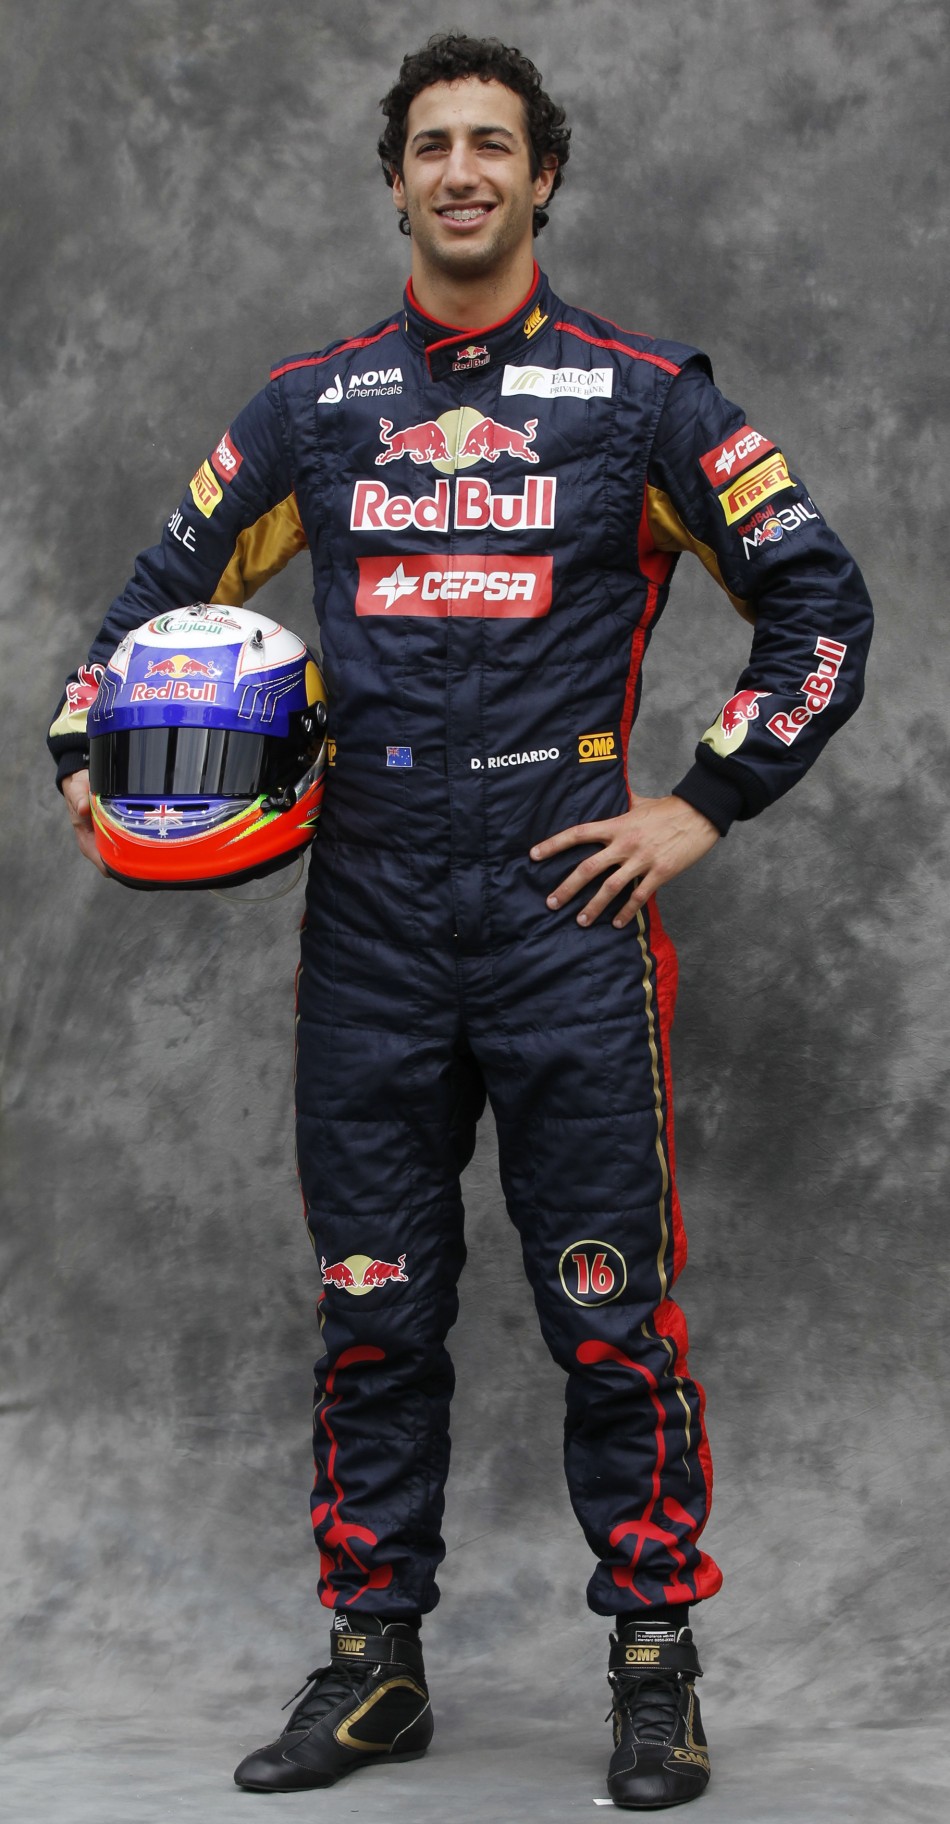 Formula 1 Australian Grand Prix 2012 Meet the Drivers [SLIDESHOW